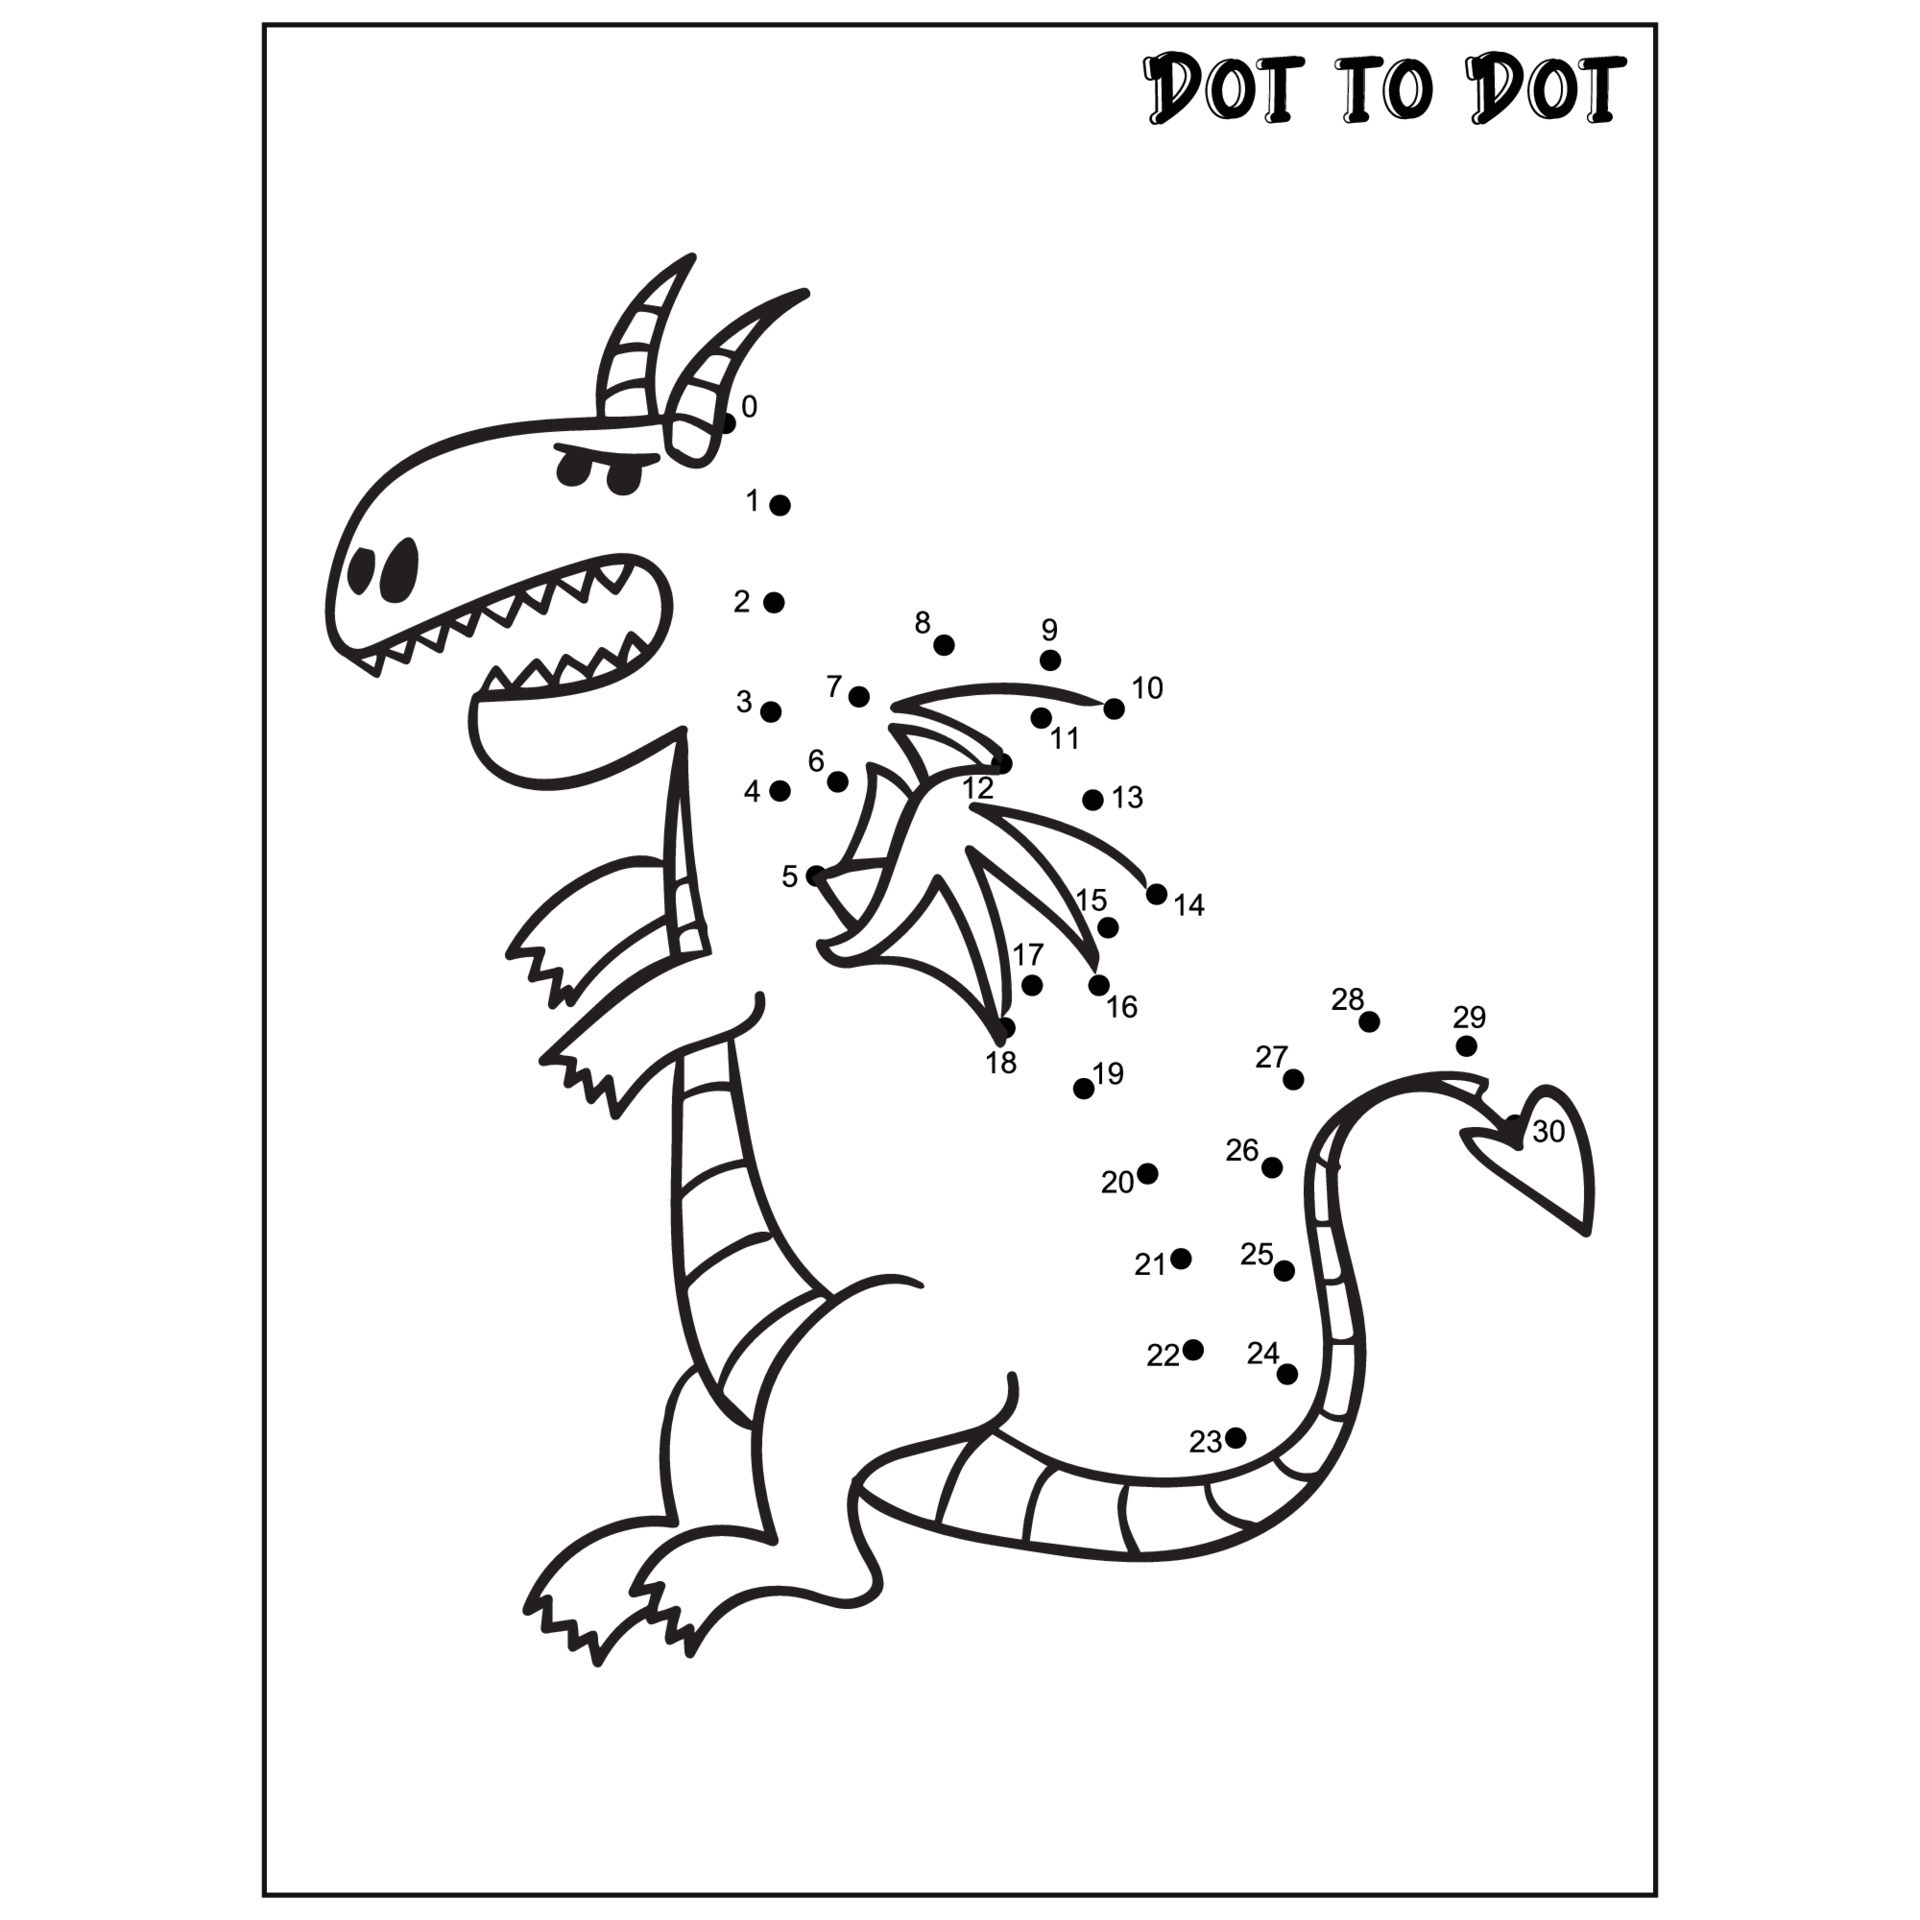 dragon-connect-the-dots-dot-to-dot-activities-11724491-vector-art-at